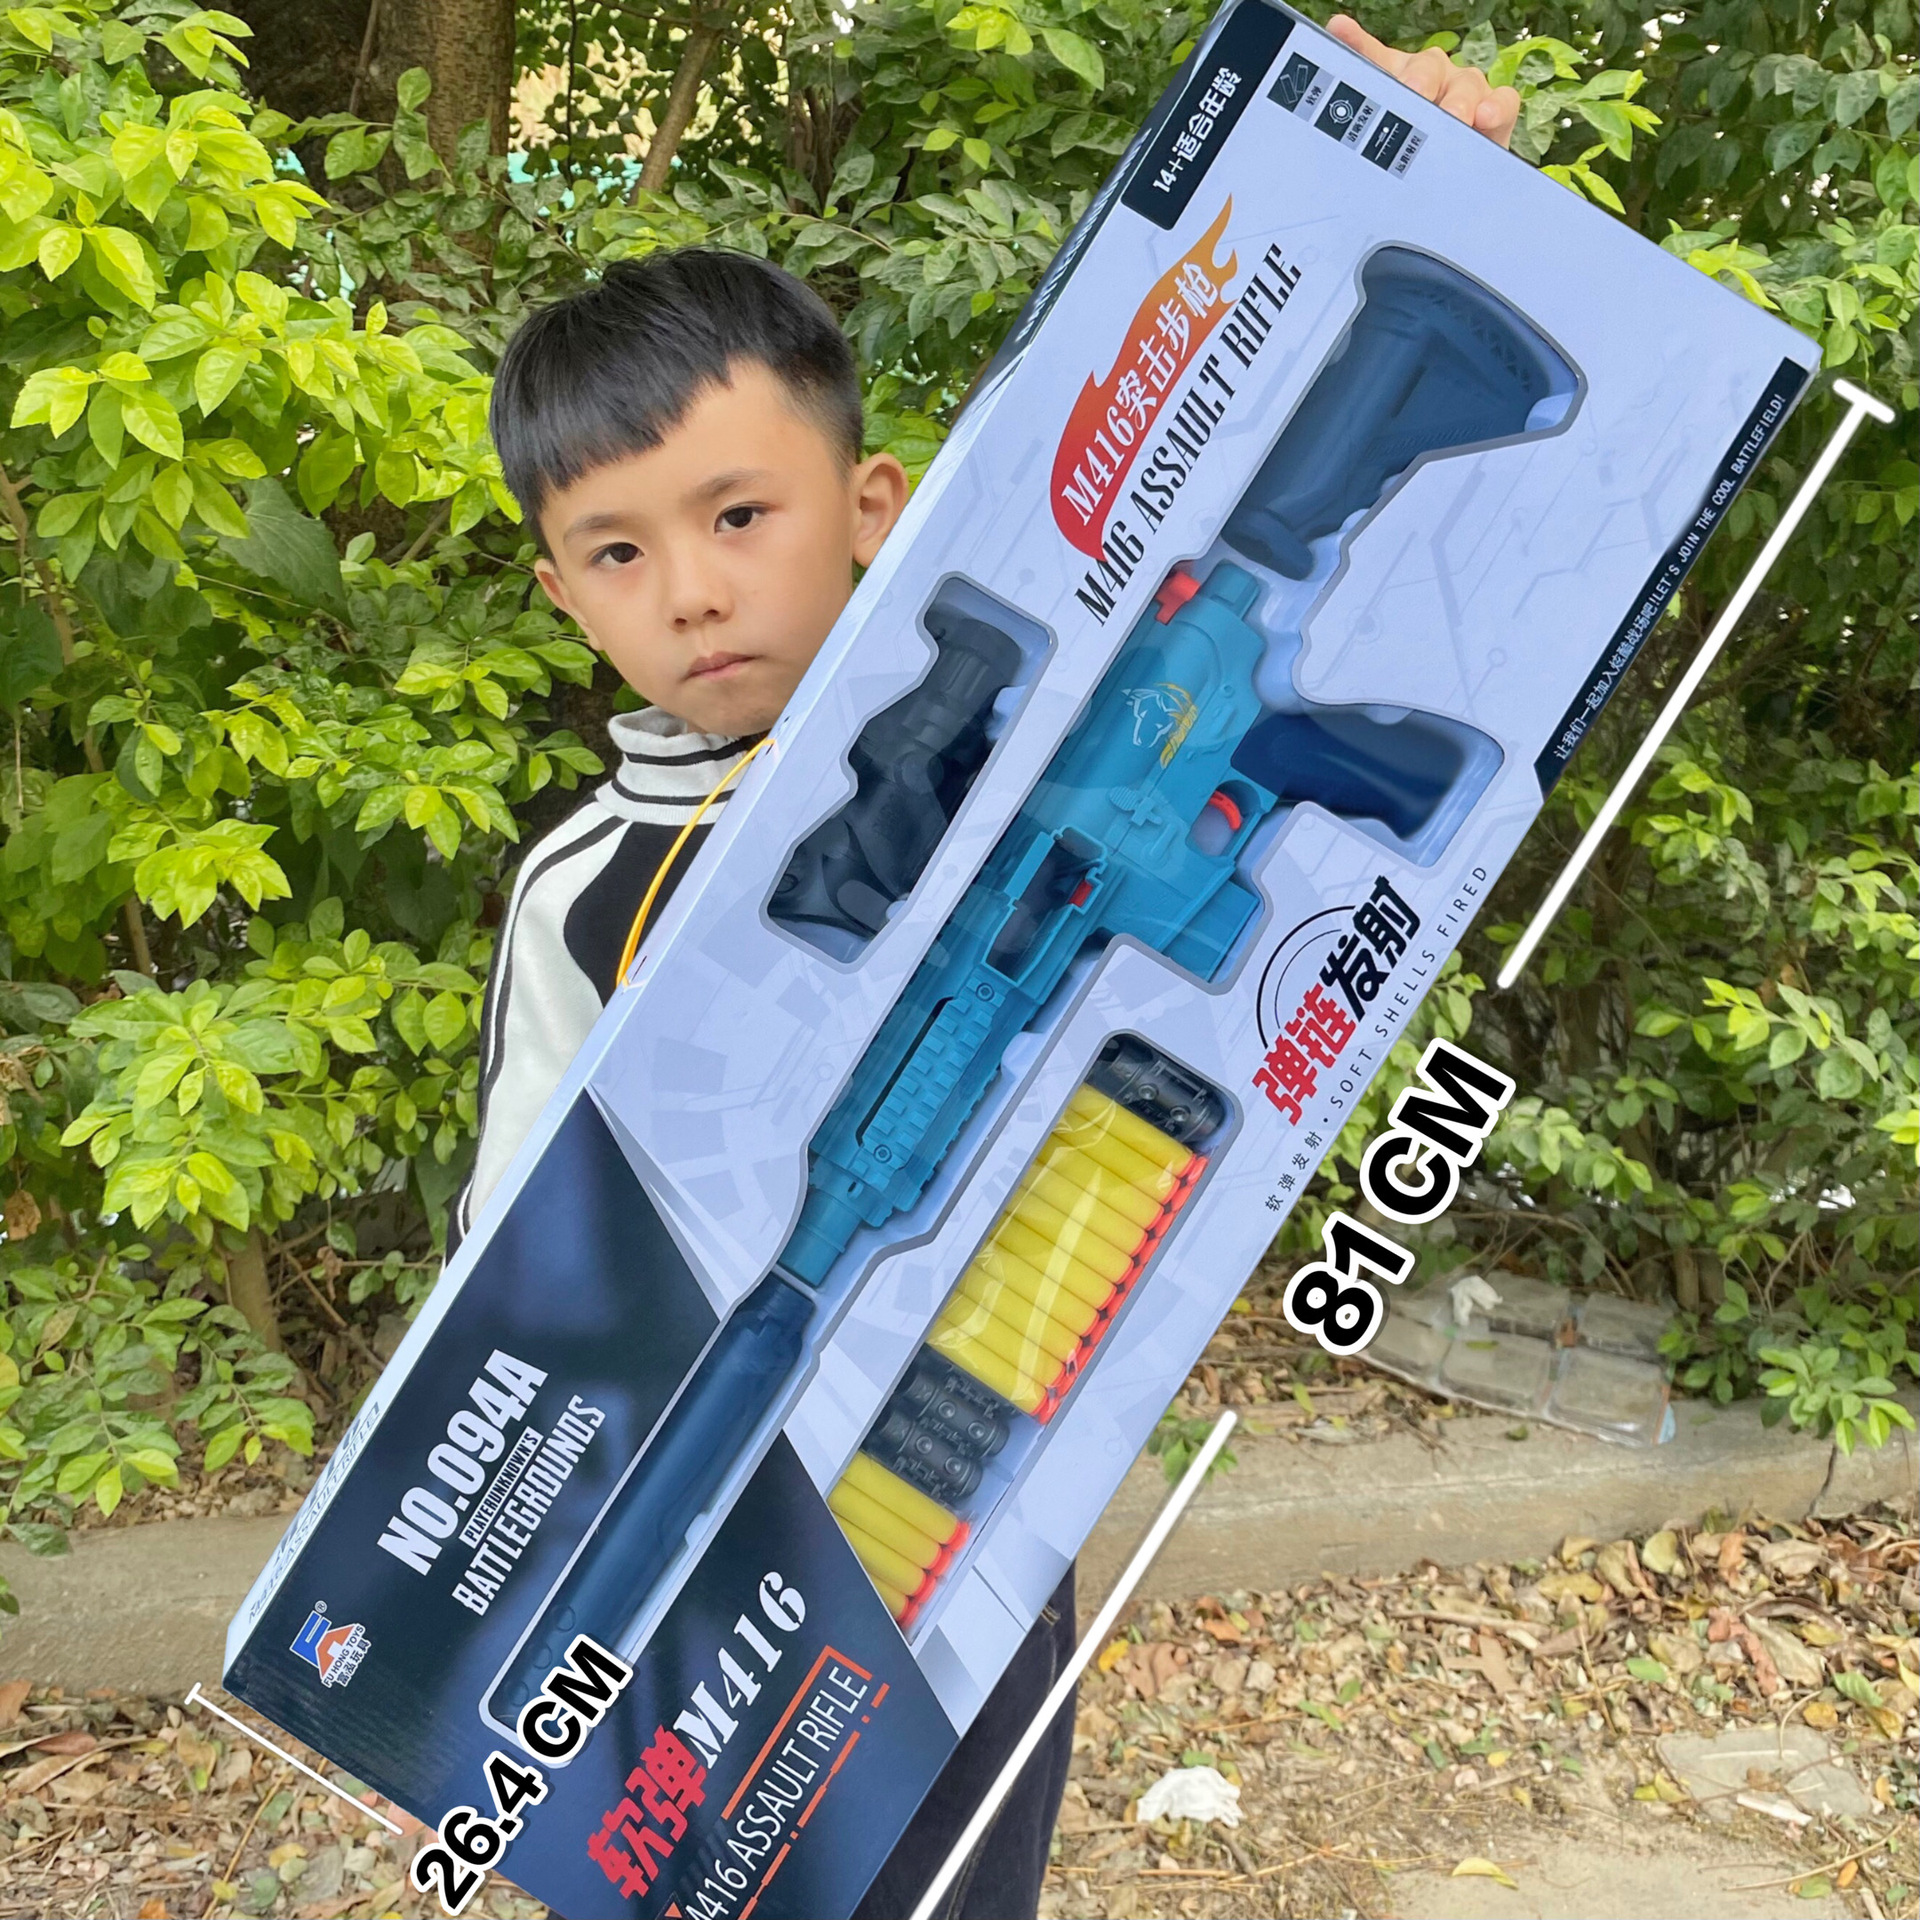 boy and children‘s toy shell soft bullet gun m416 98k toy gun supermarket enrollment gift stall supply